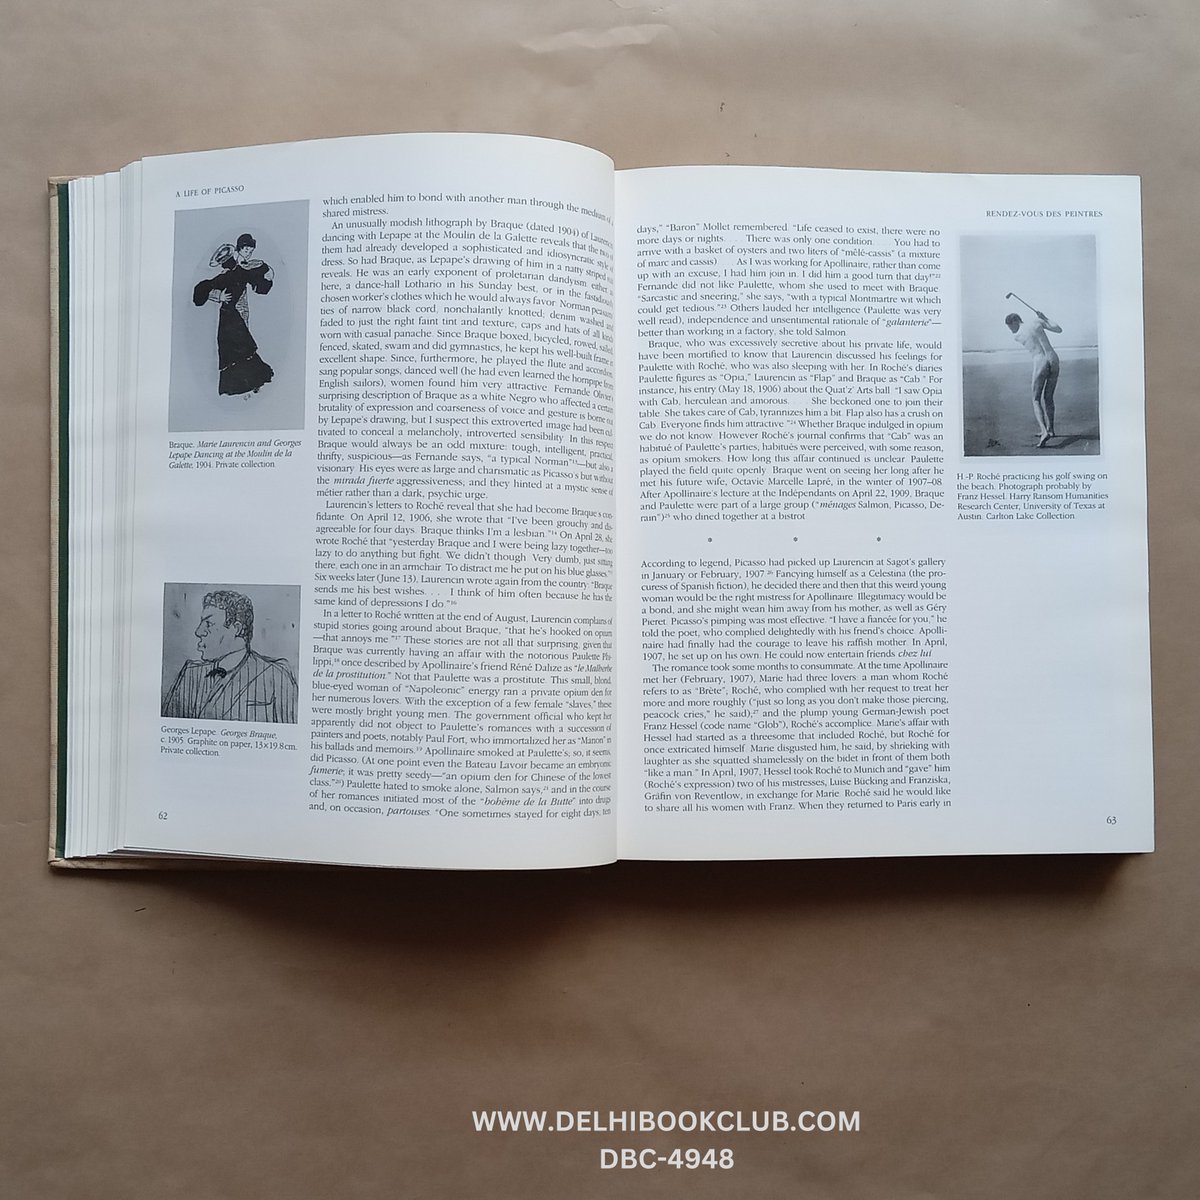 ISBN NO :-  0394559185
Book Name :-A LIFE OF PICASSO VOLUME 2 1907-1971: BY JOHN RICHARDSON
Author Name :-JOHN RICHARDSON
Year :-1966

DELHI BOOK CLUB

#delhibookclub 
#PICASSO
#ALIFEOFPICASSOVOLUME2 #Year1966 #JOHNRICHARDSON #FirstEdition
#Art #UniquePersonal

 #books #booklover